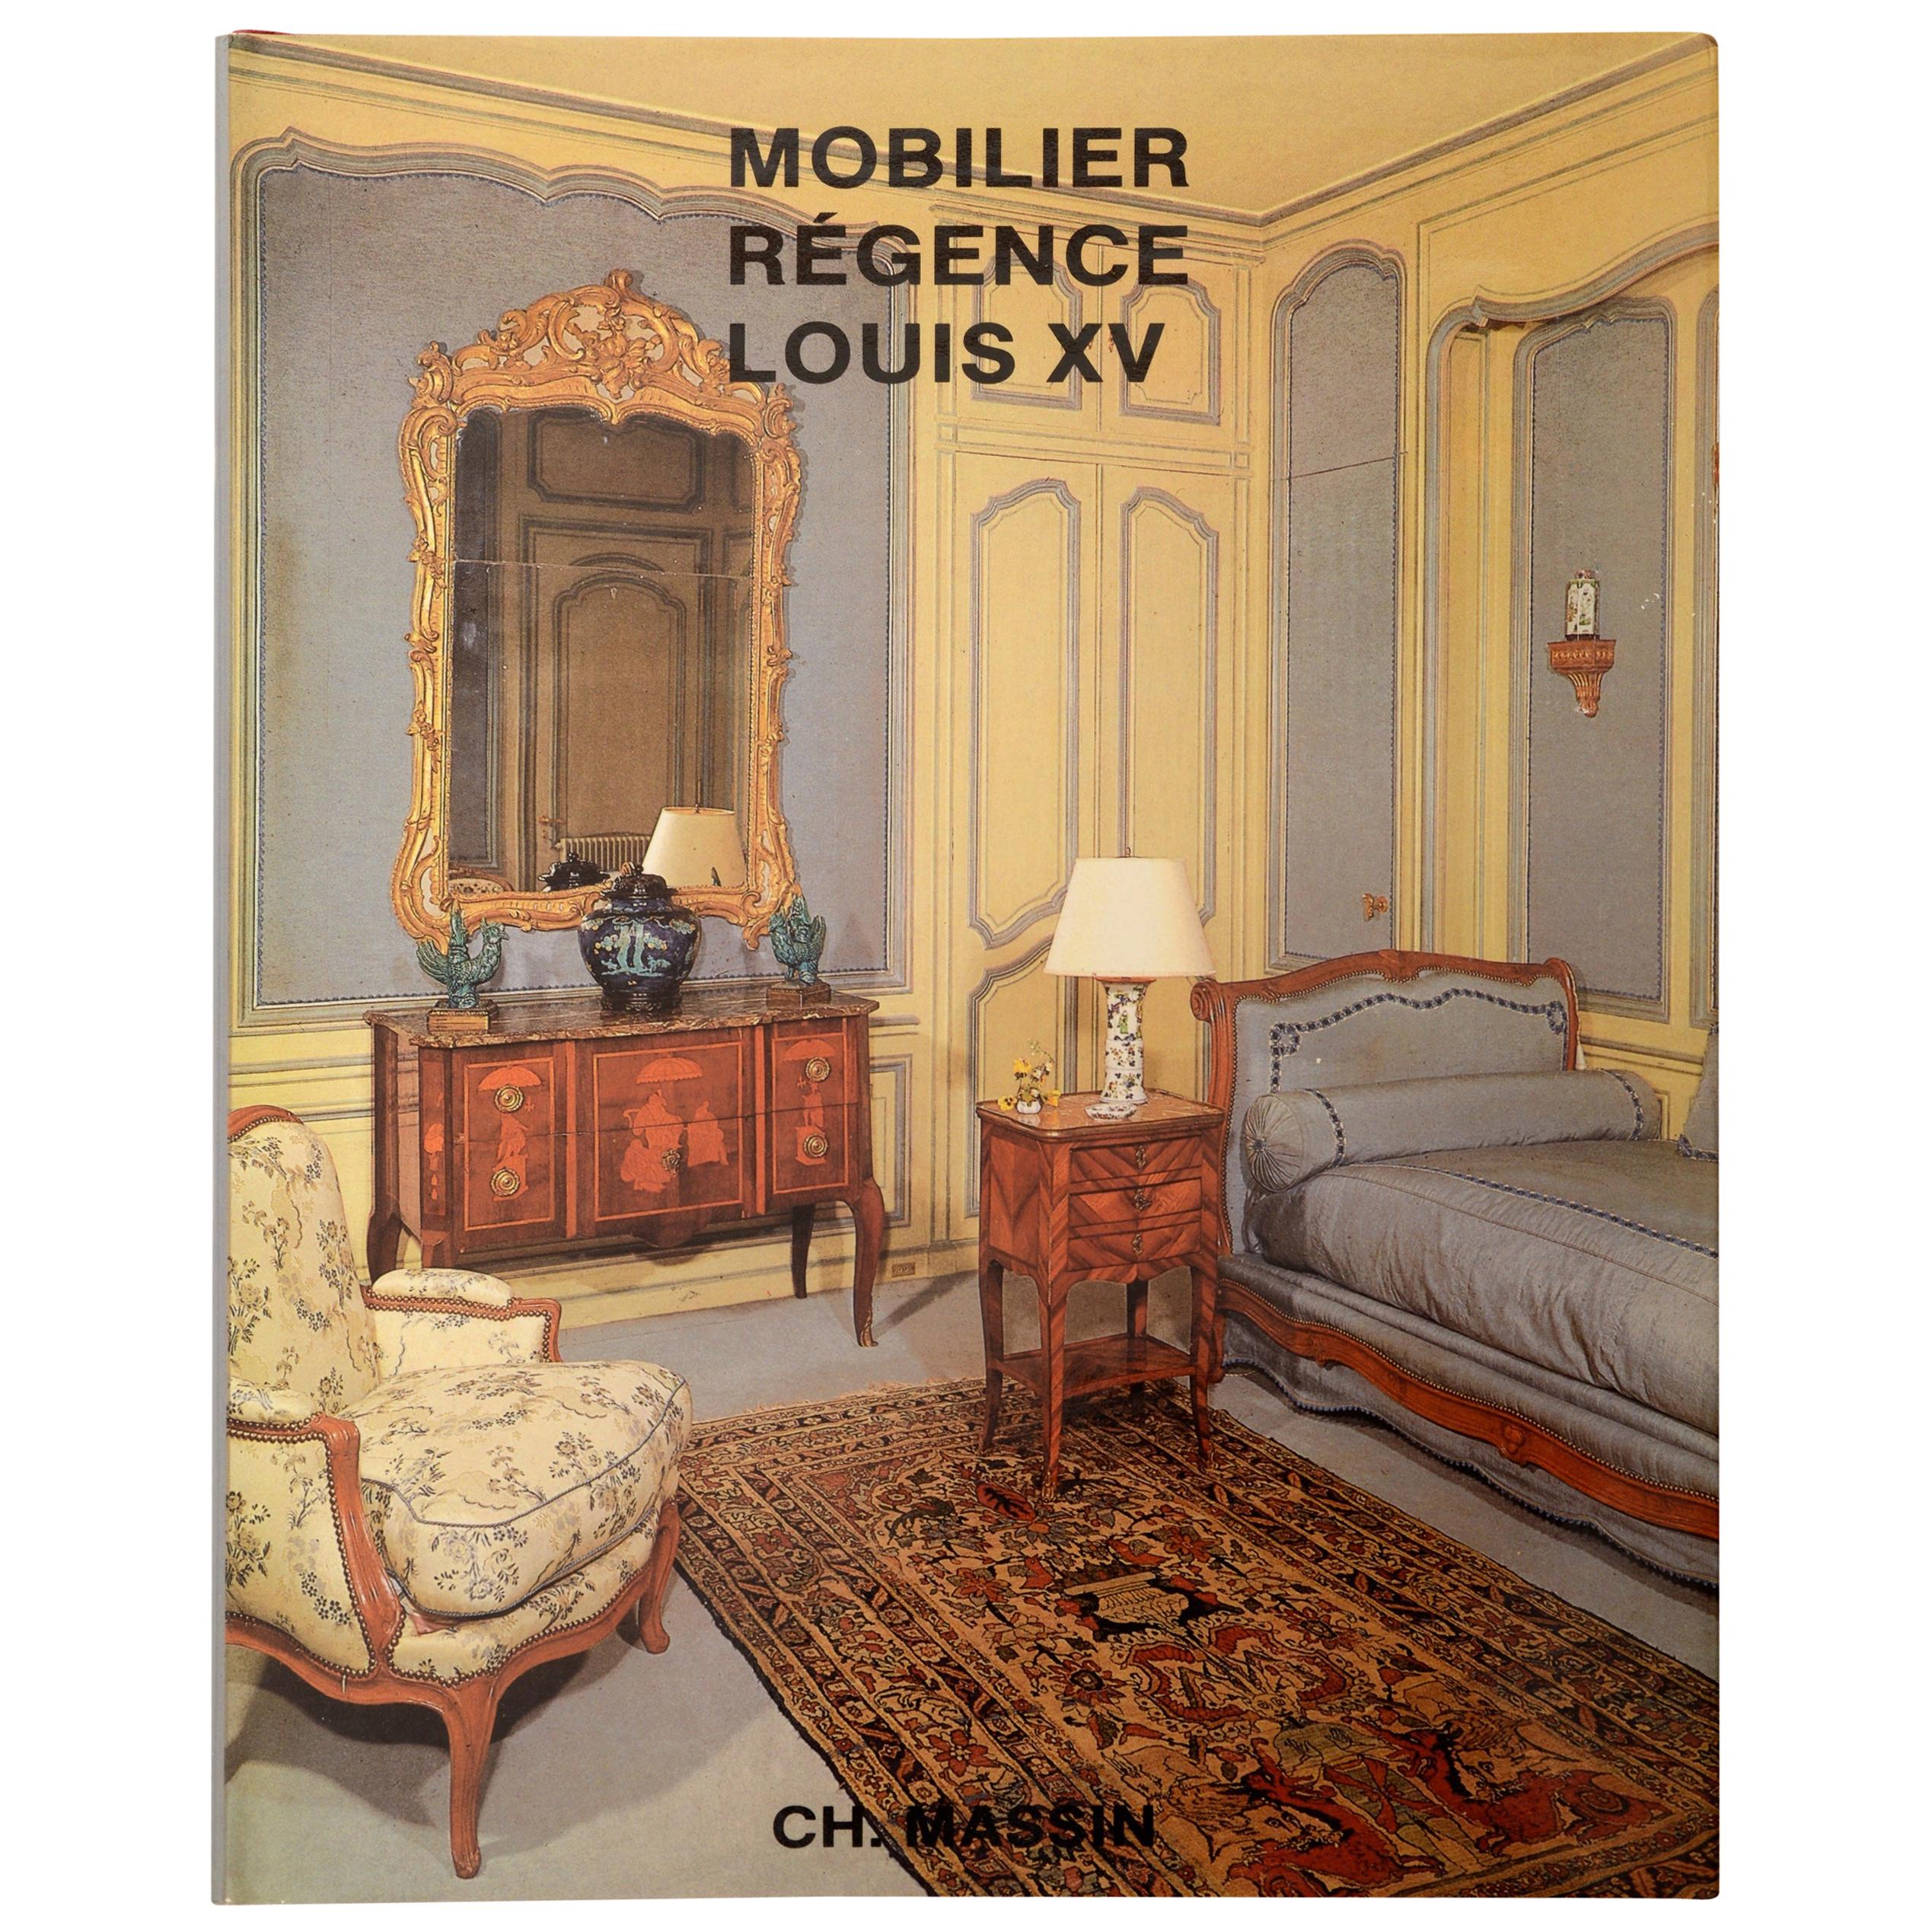 Mobilier Régence Louis XV by Monica Burckhardt, First Edition